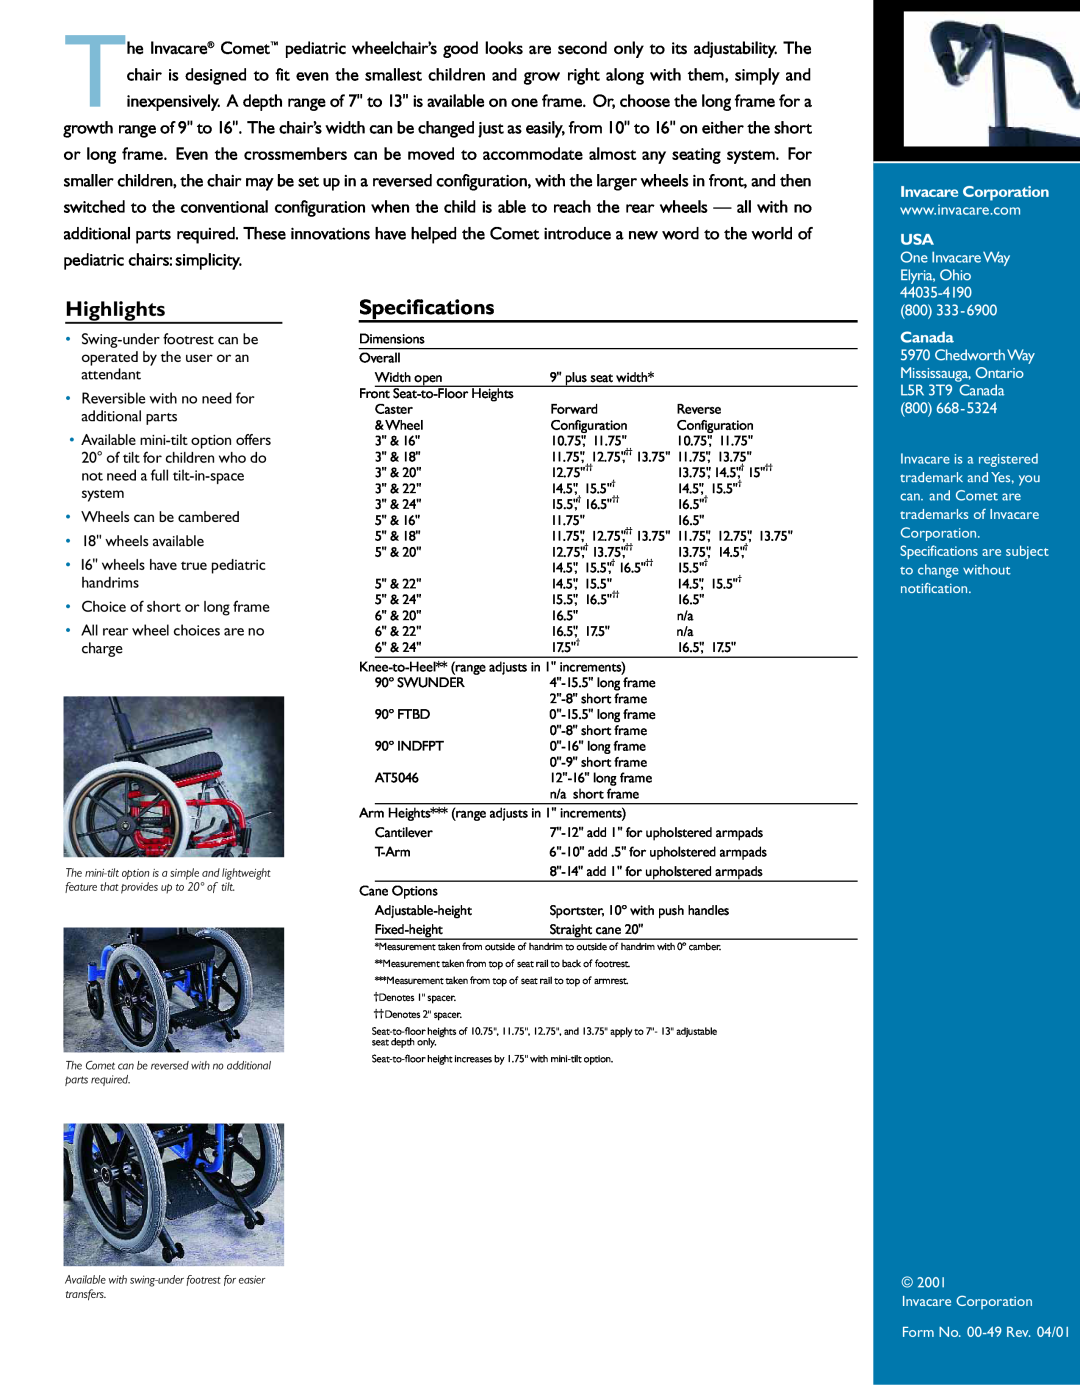 Invacare Pediatric Wheelchair specifications Highlights, Specifications, Invacare Corporation, Canada 